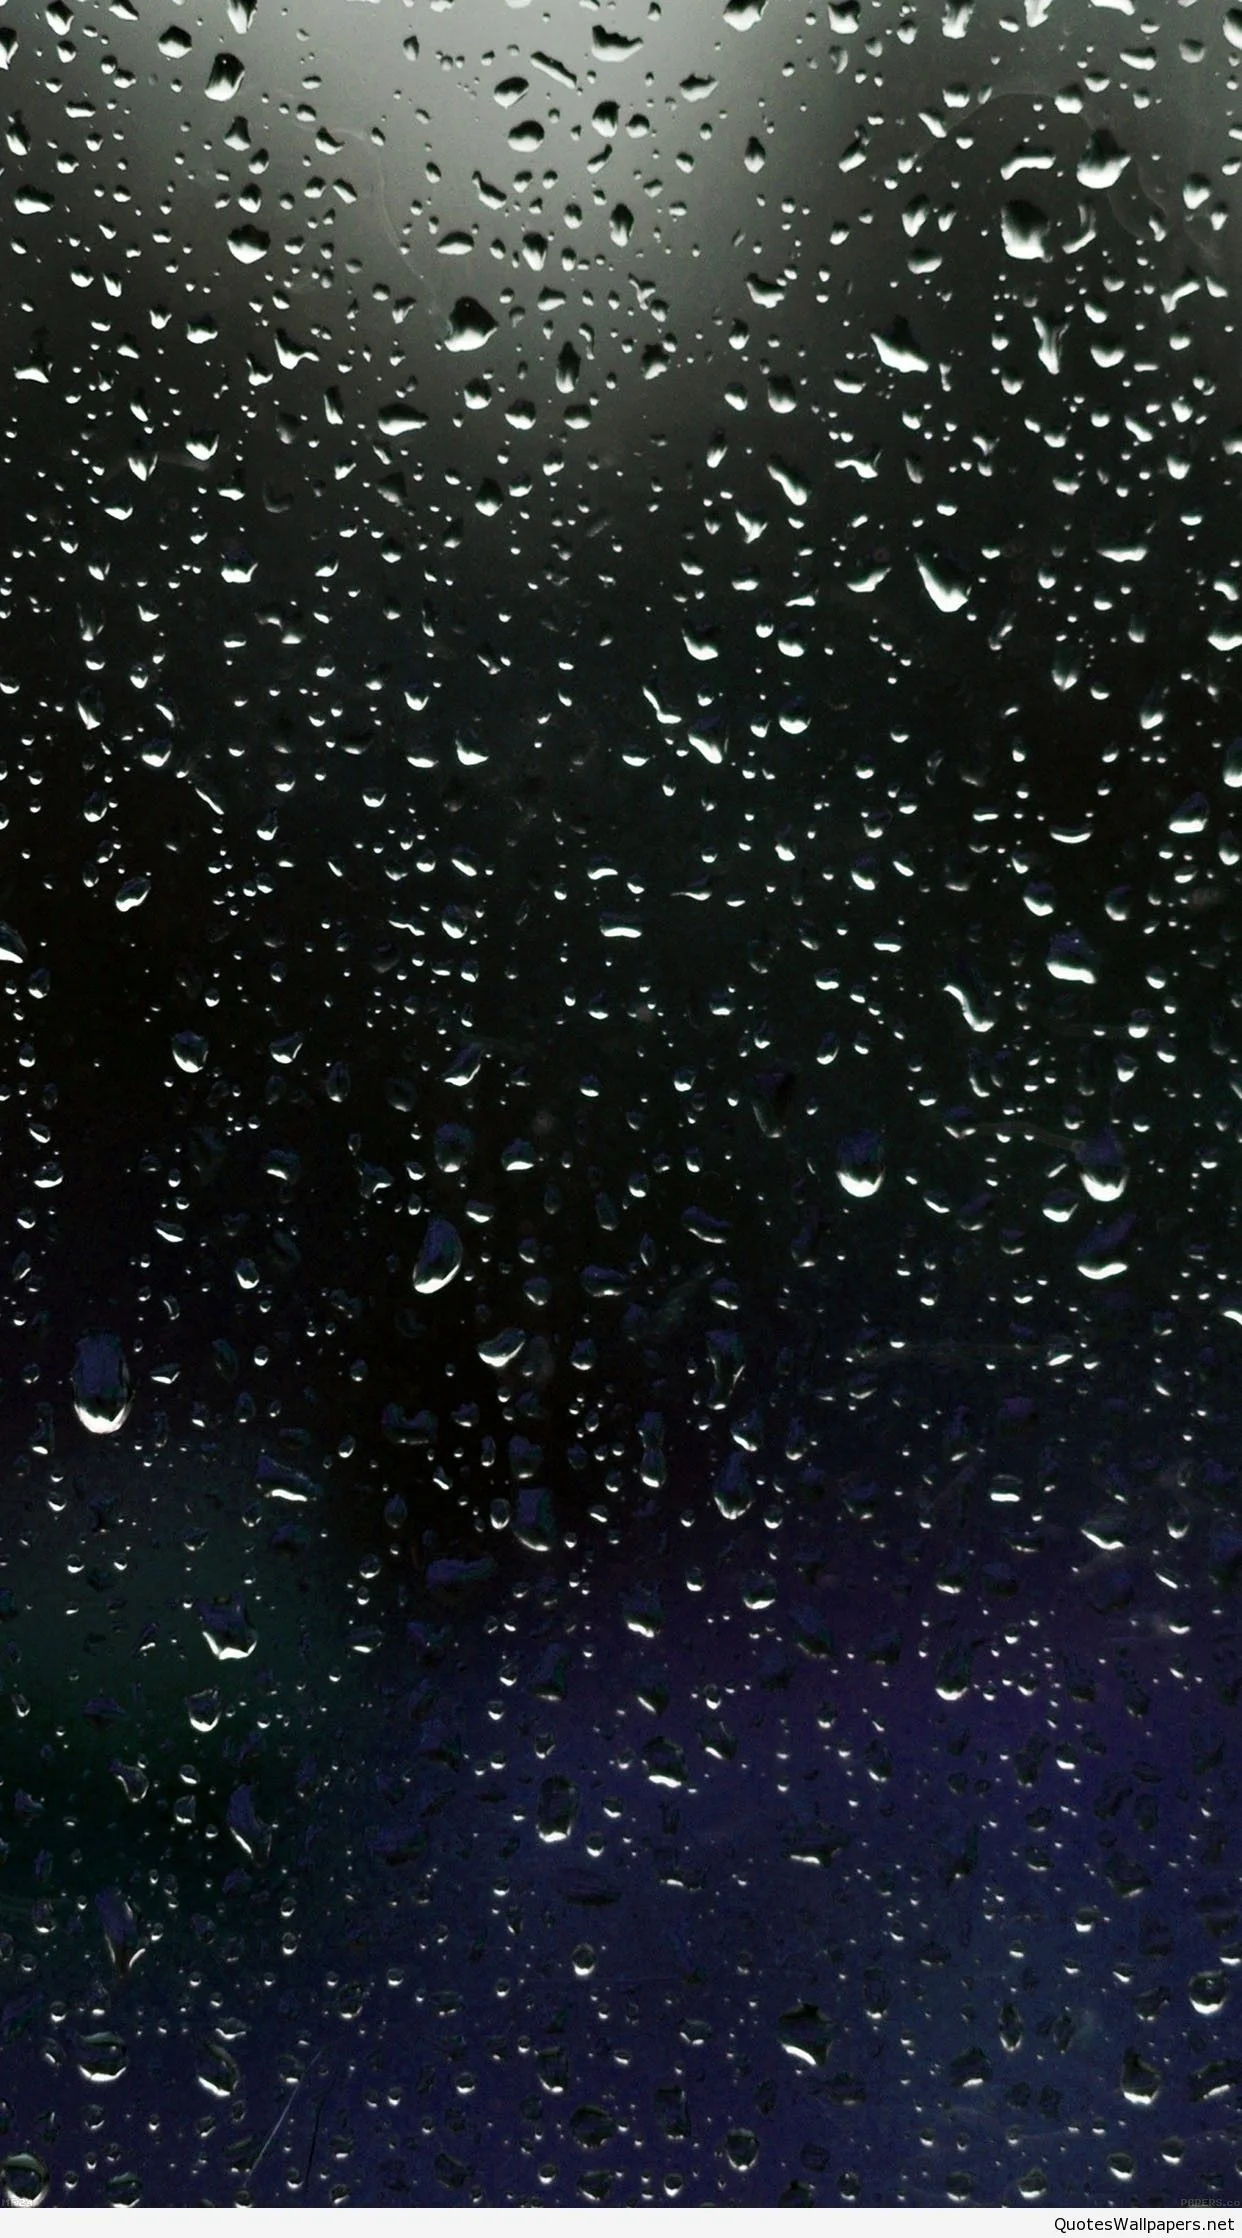 raining windows 10 rain drops nature iphone 6 plus wallpapers – bokeh  effect iphone 6 plus